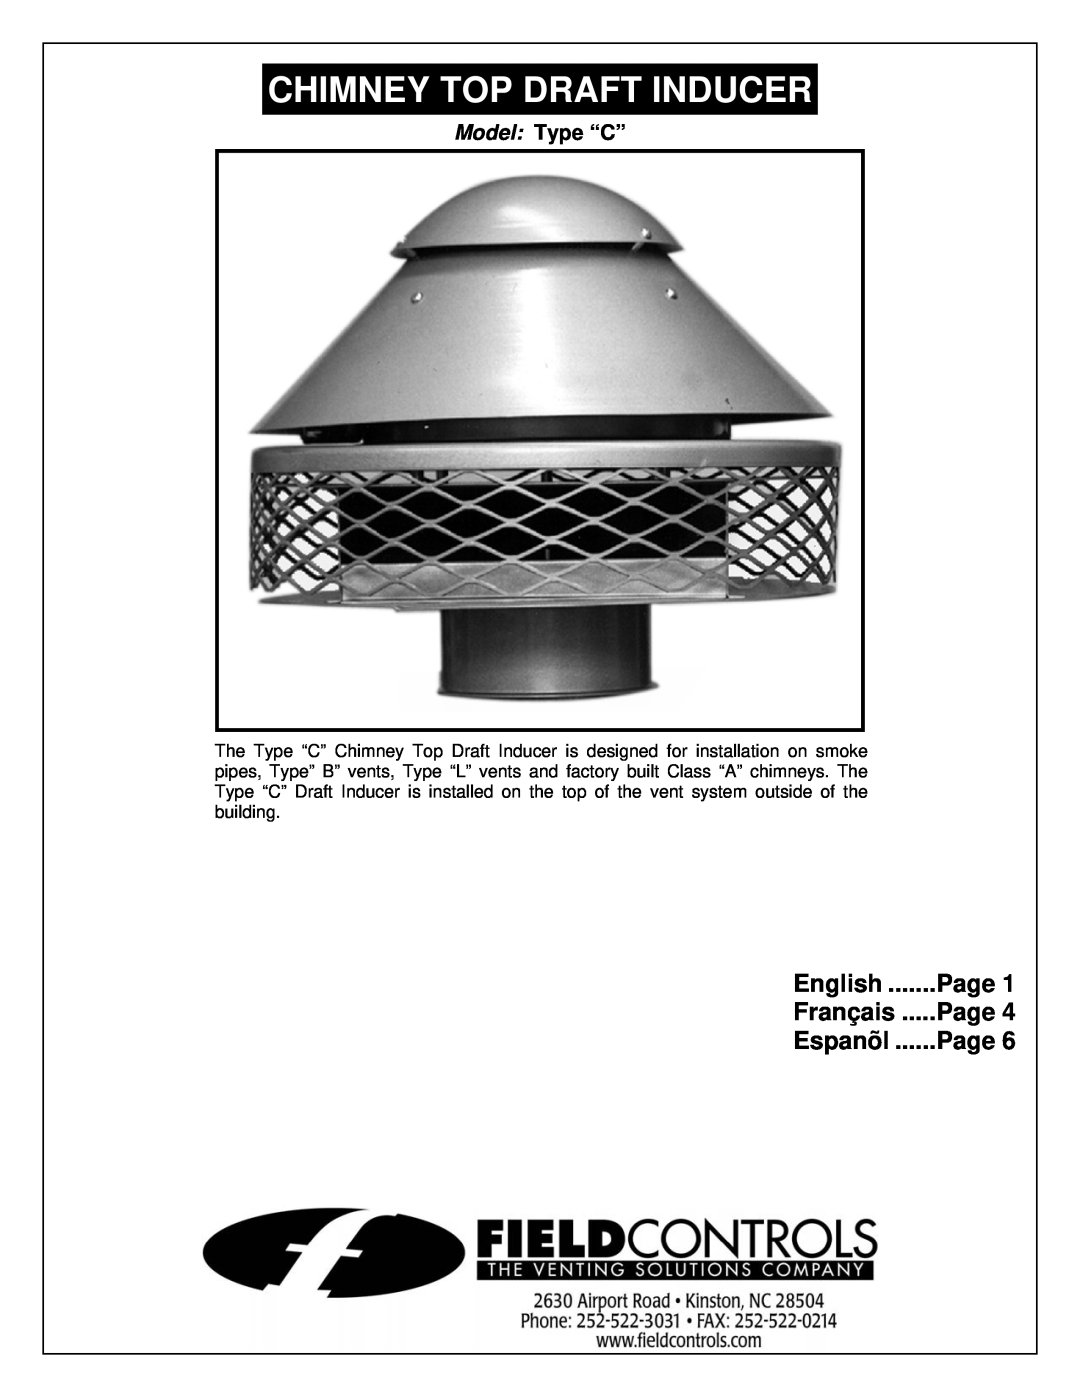 Field Controls TYPE "C manual Chimney Top Draft Inducer, Model Type “C”, English, Page, Français, Espanõl 